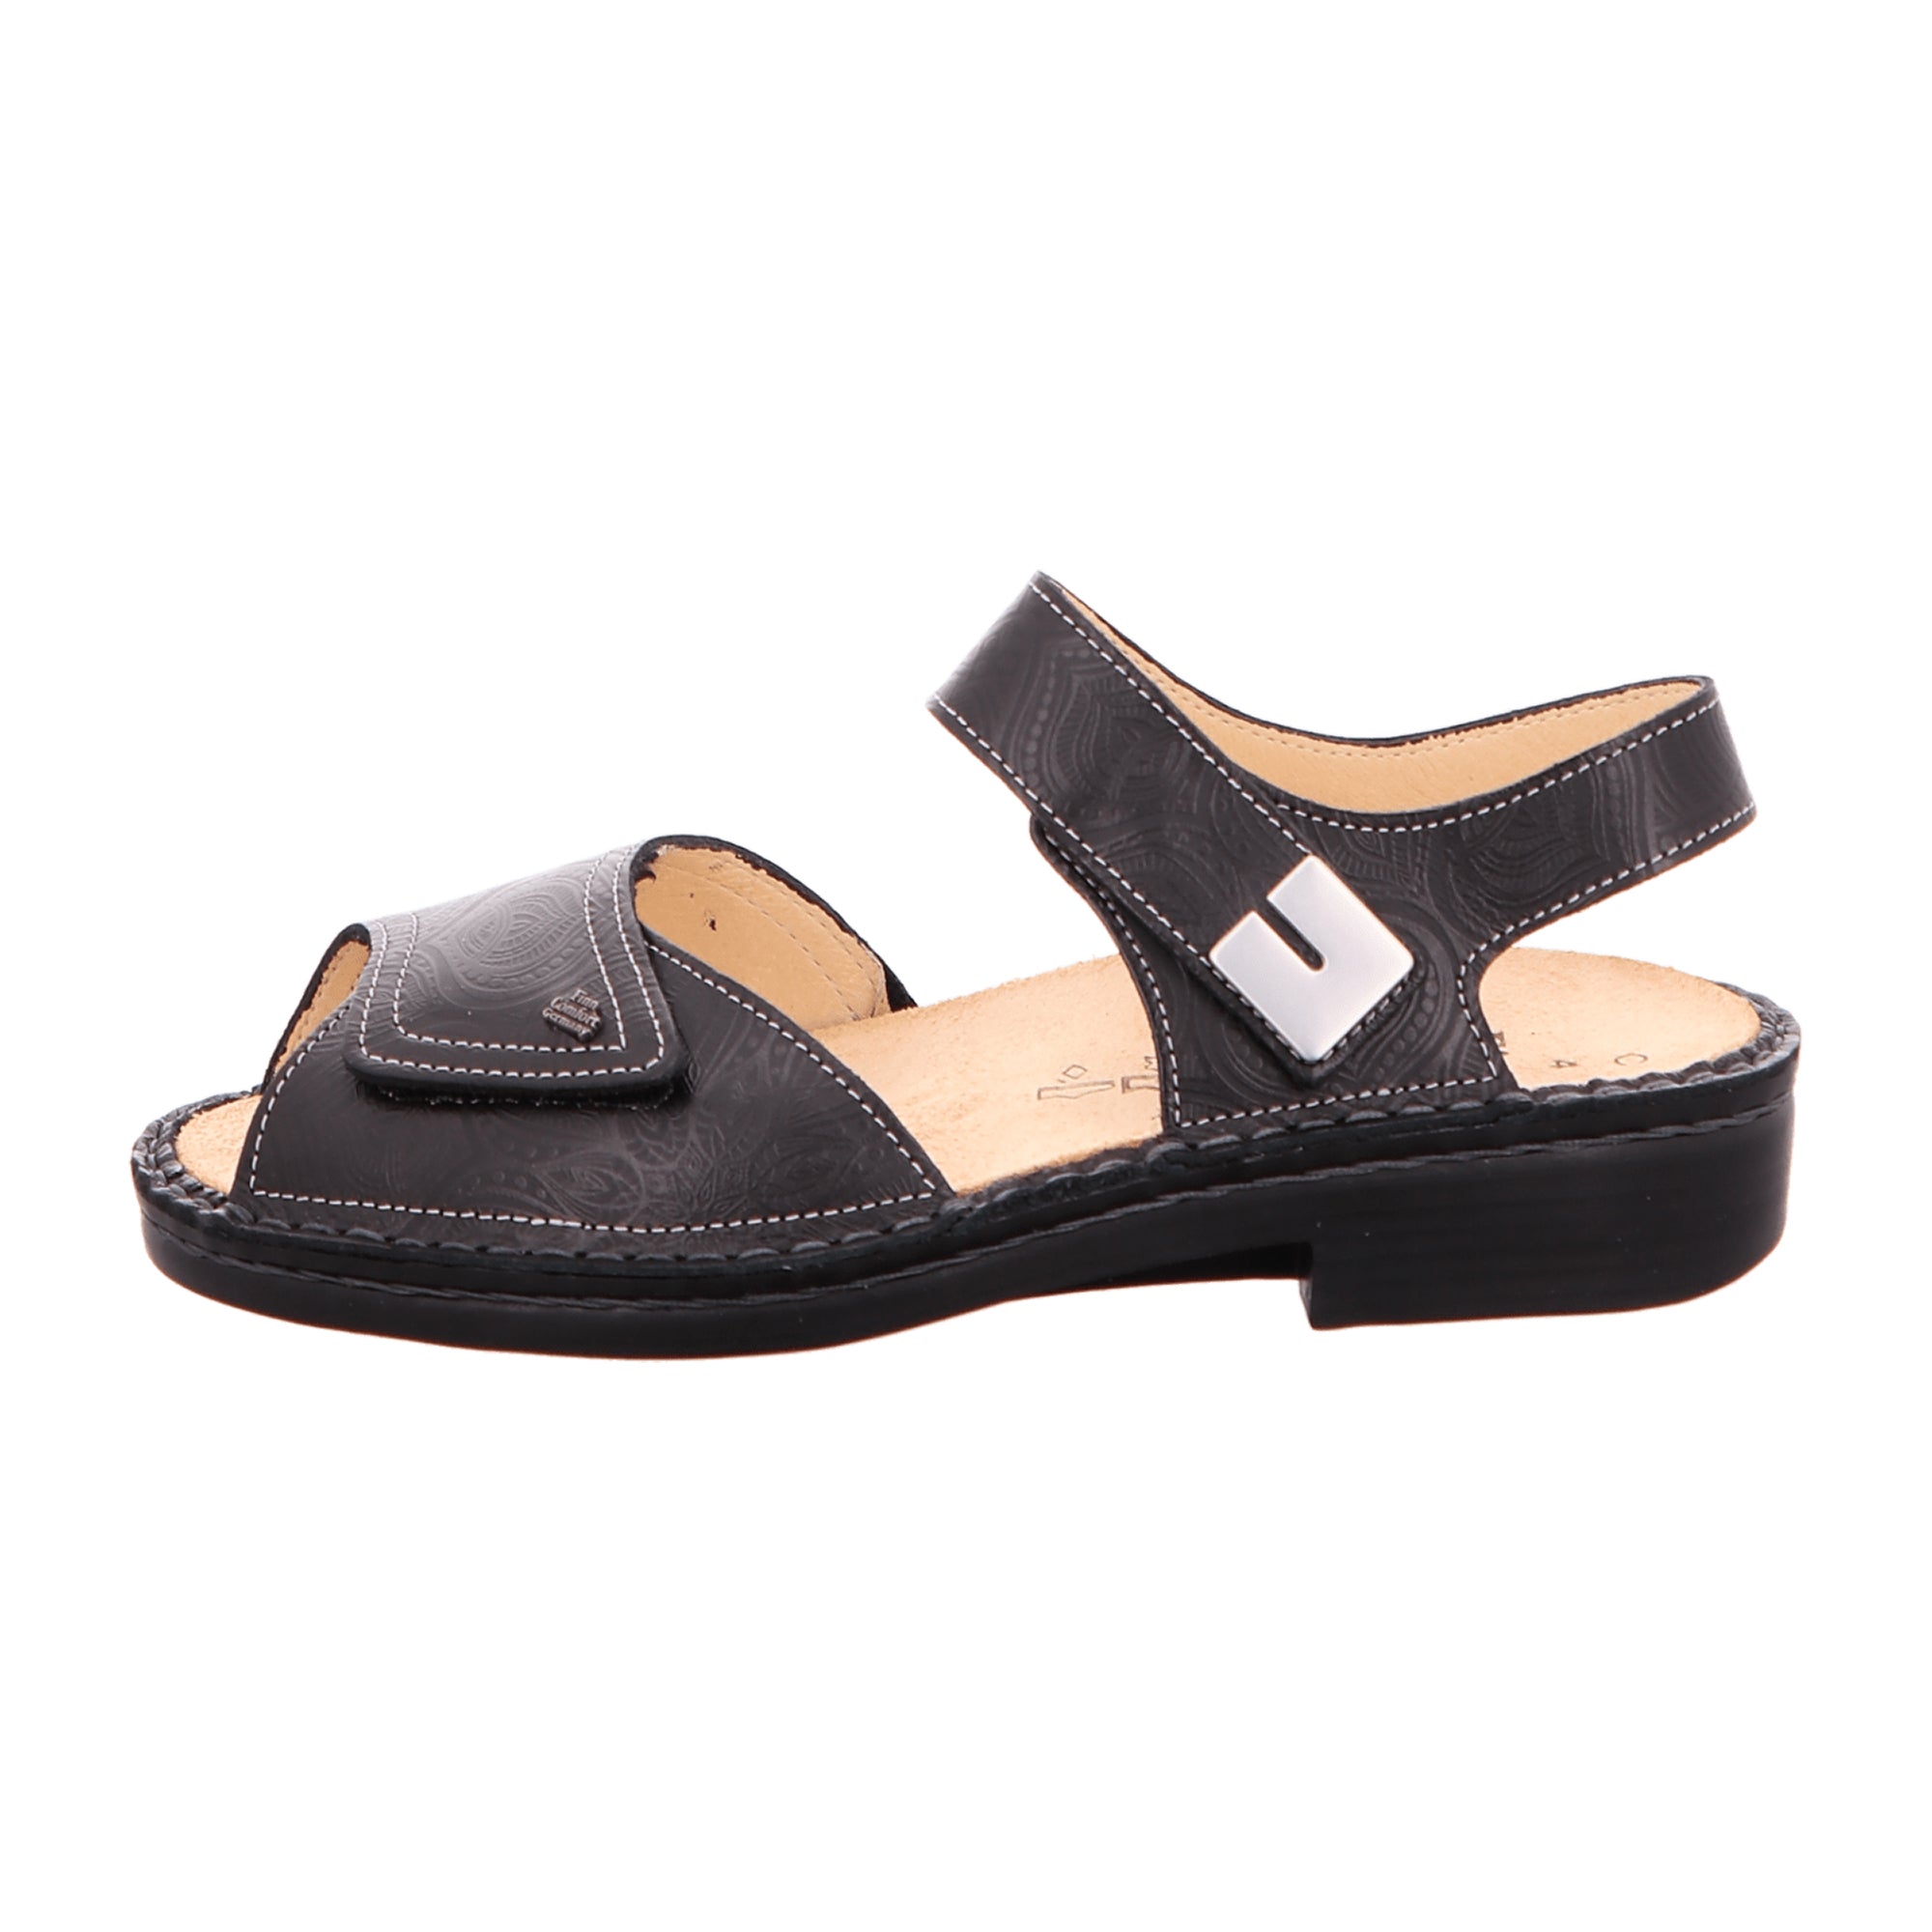 Finn Comfort Luxor Women's Comfort Sandals - Stylish & Durable Black Leather